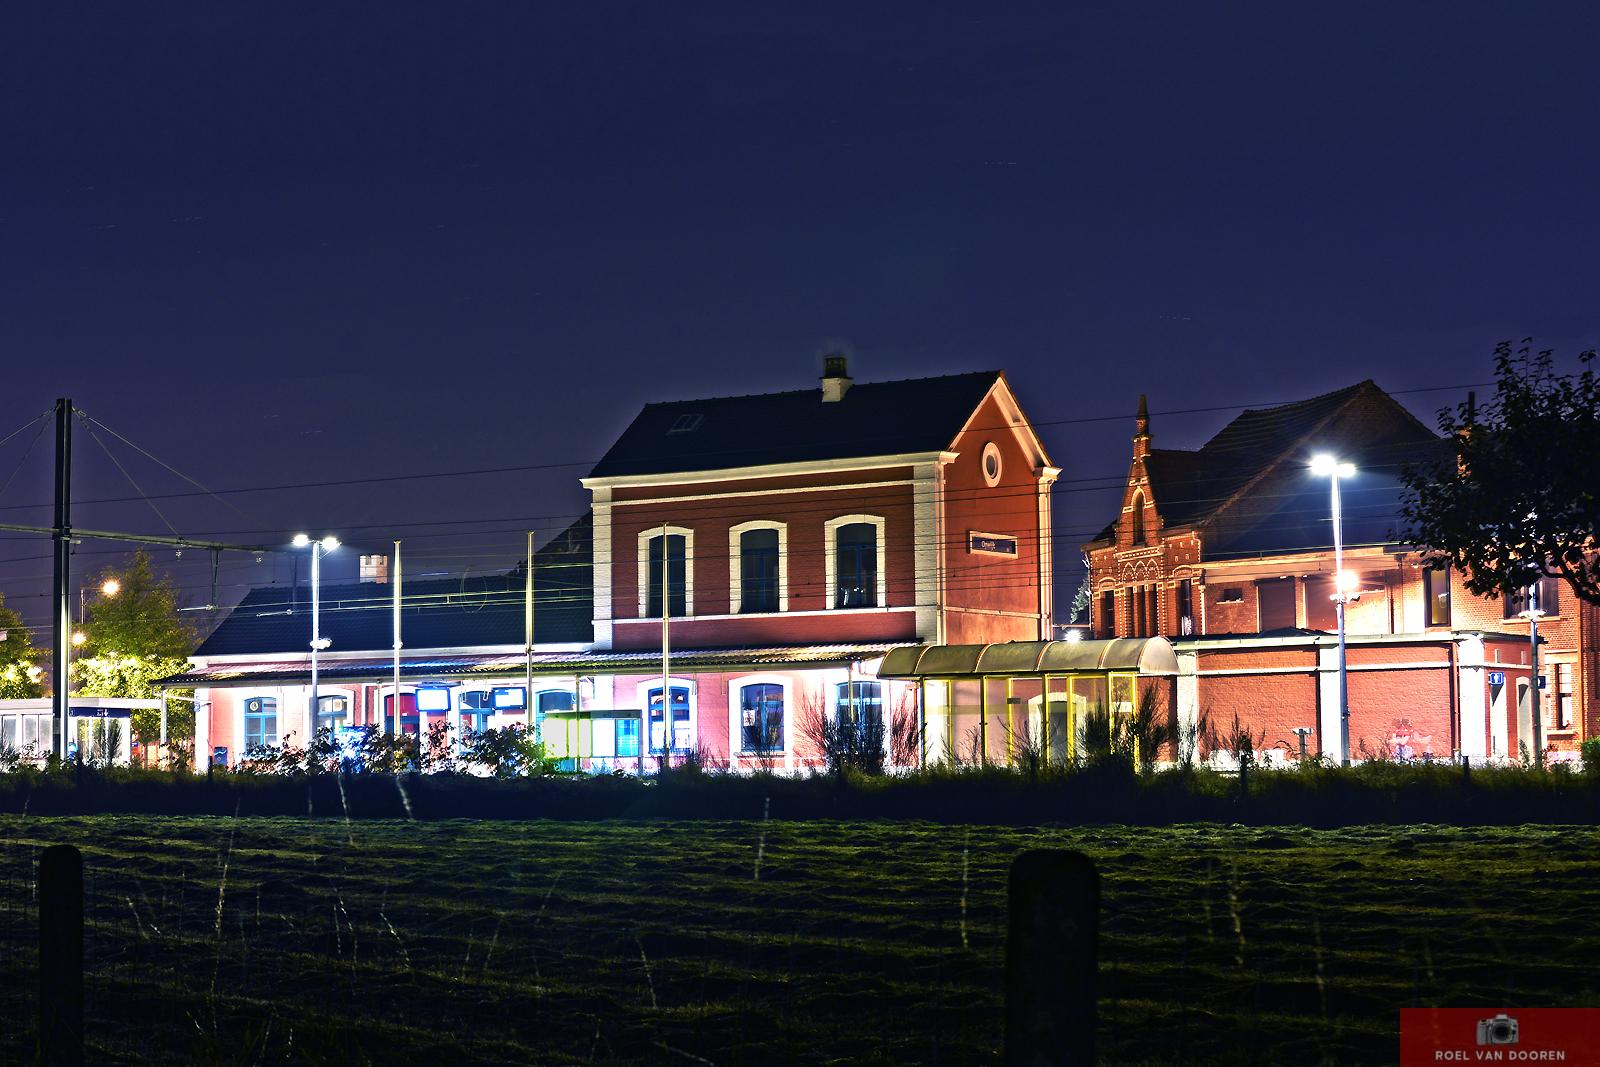 Station Opwijk